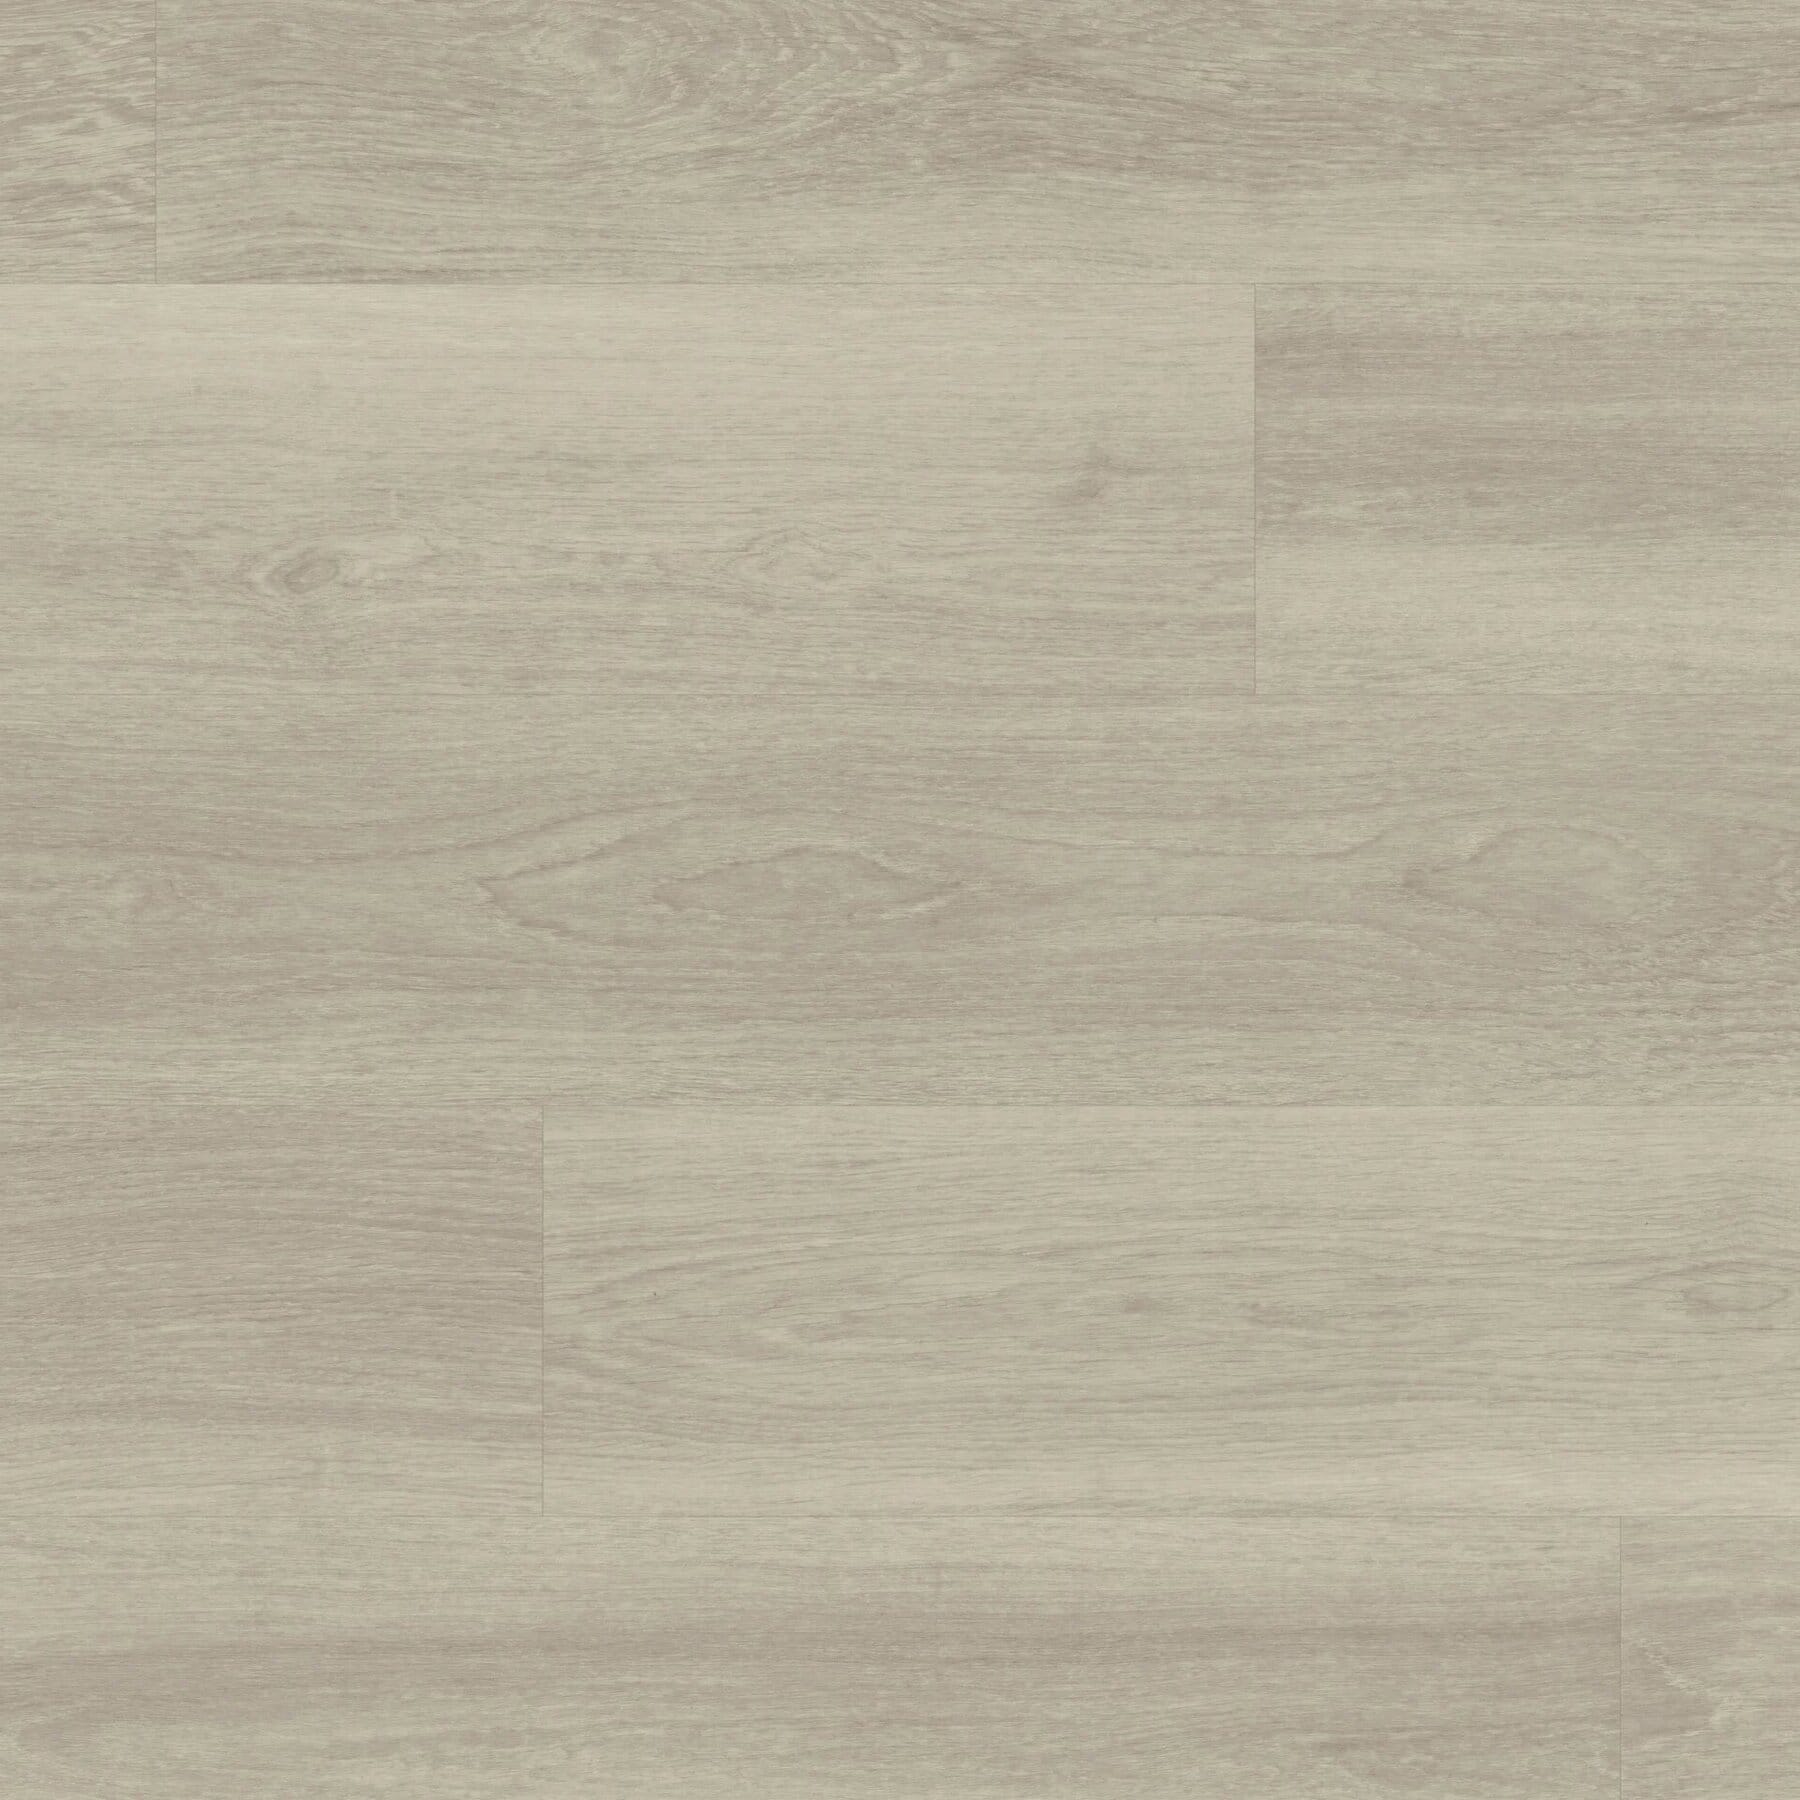 View of VGW120T Grey Brushed Oak luxury vinyl tile by Karndean